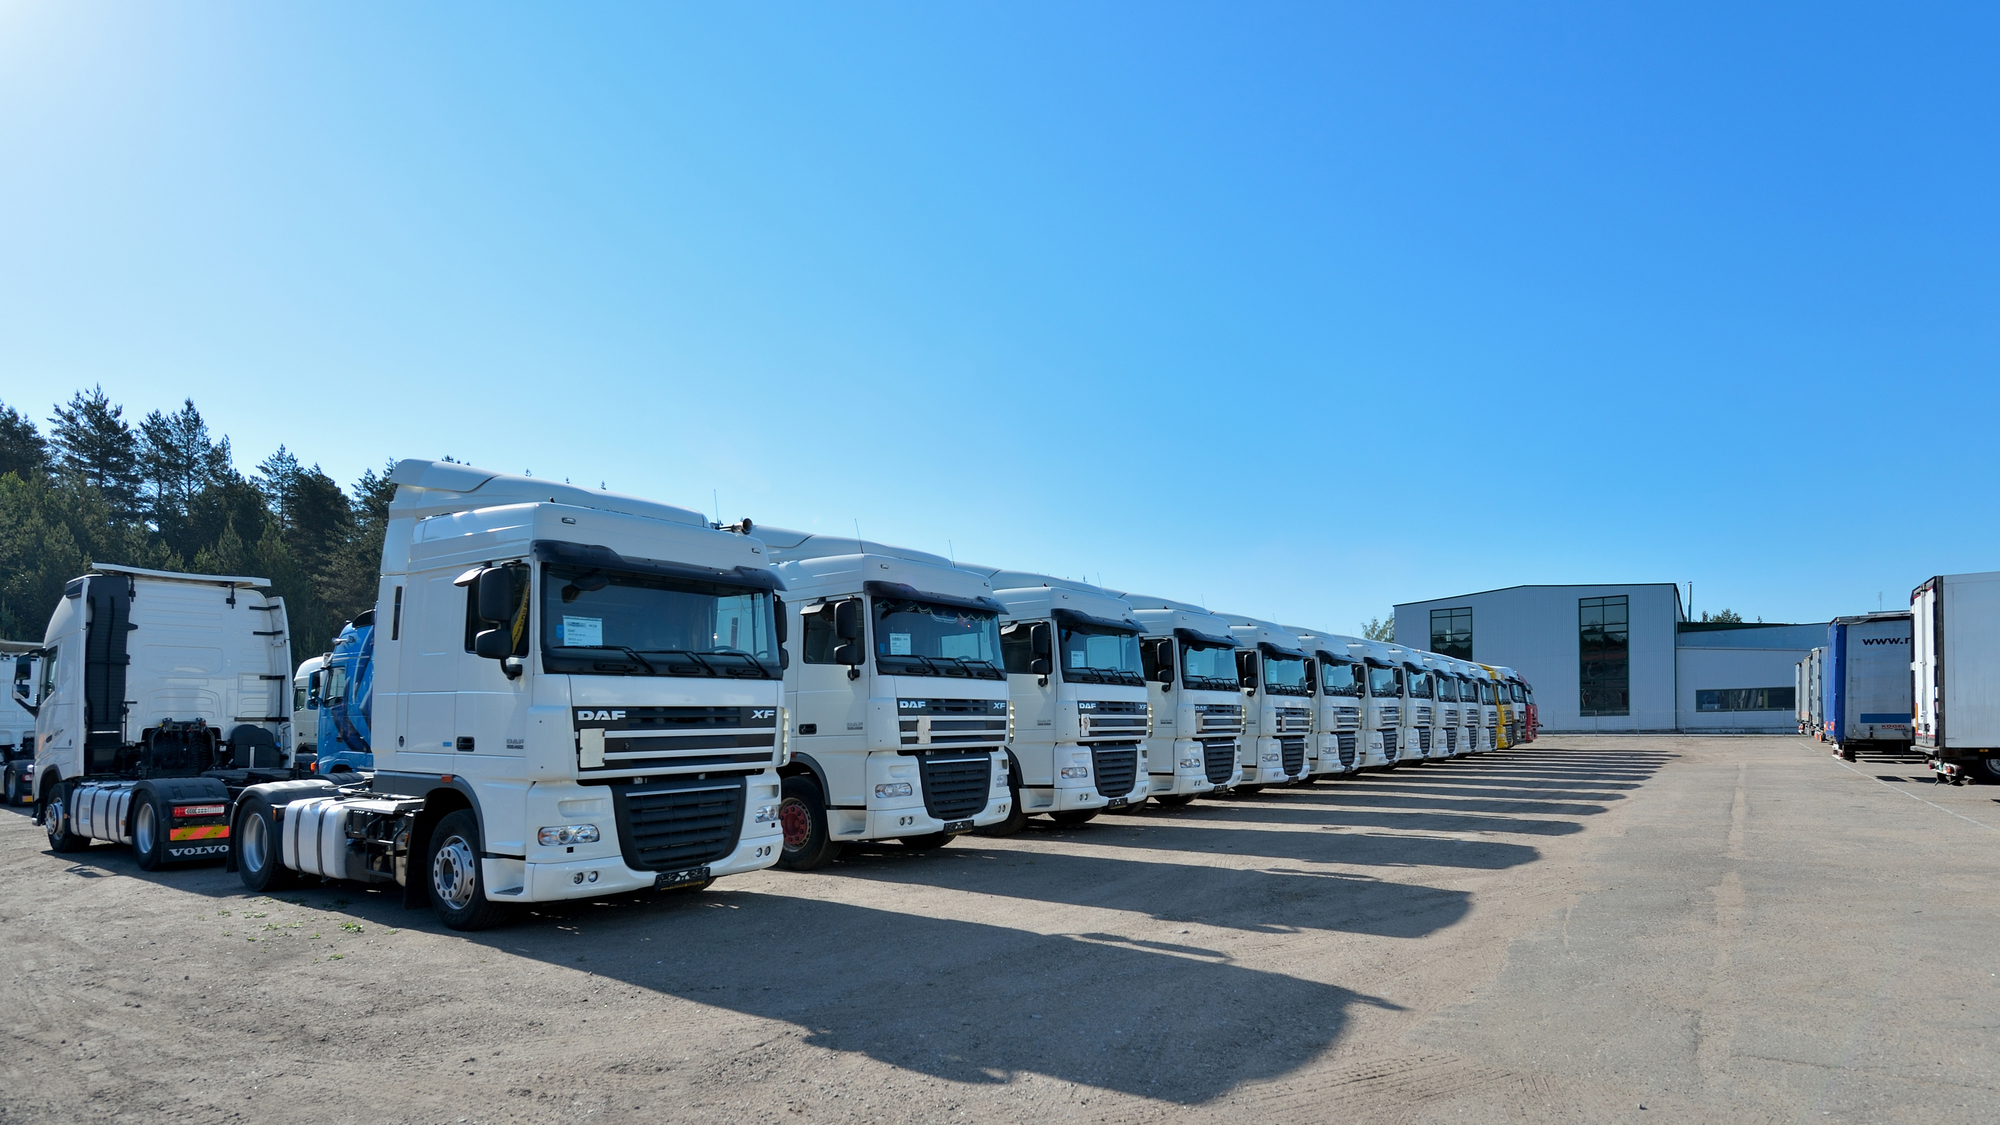 UAB 'Trucks Market' undefined: 7 kép.